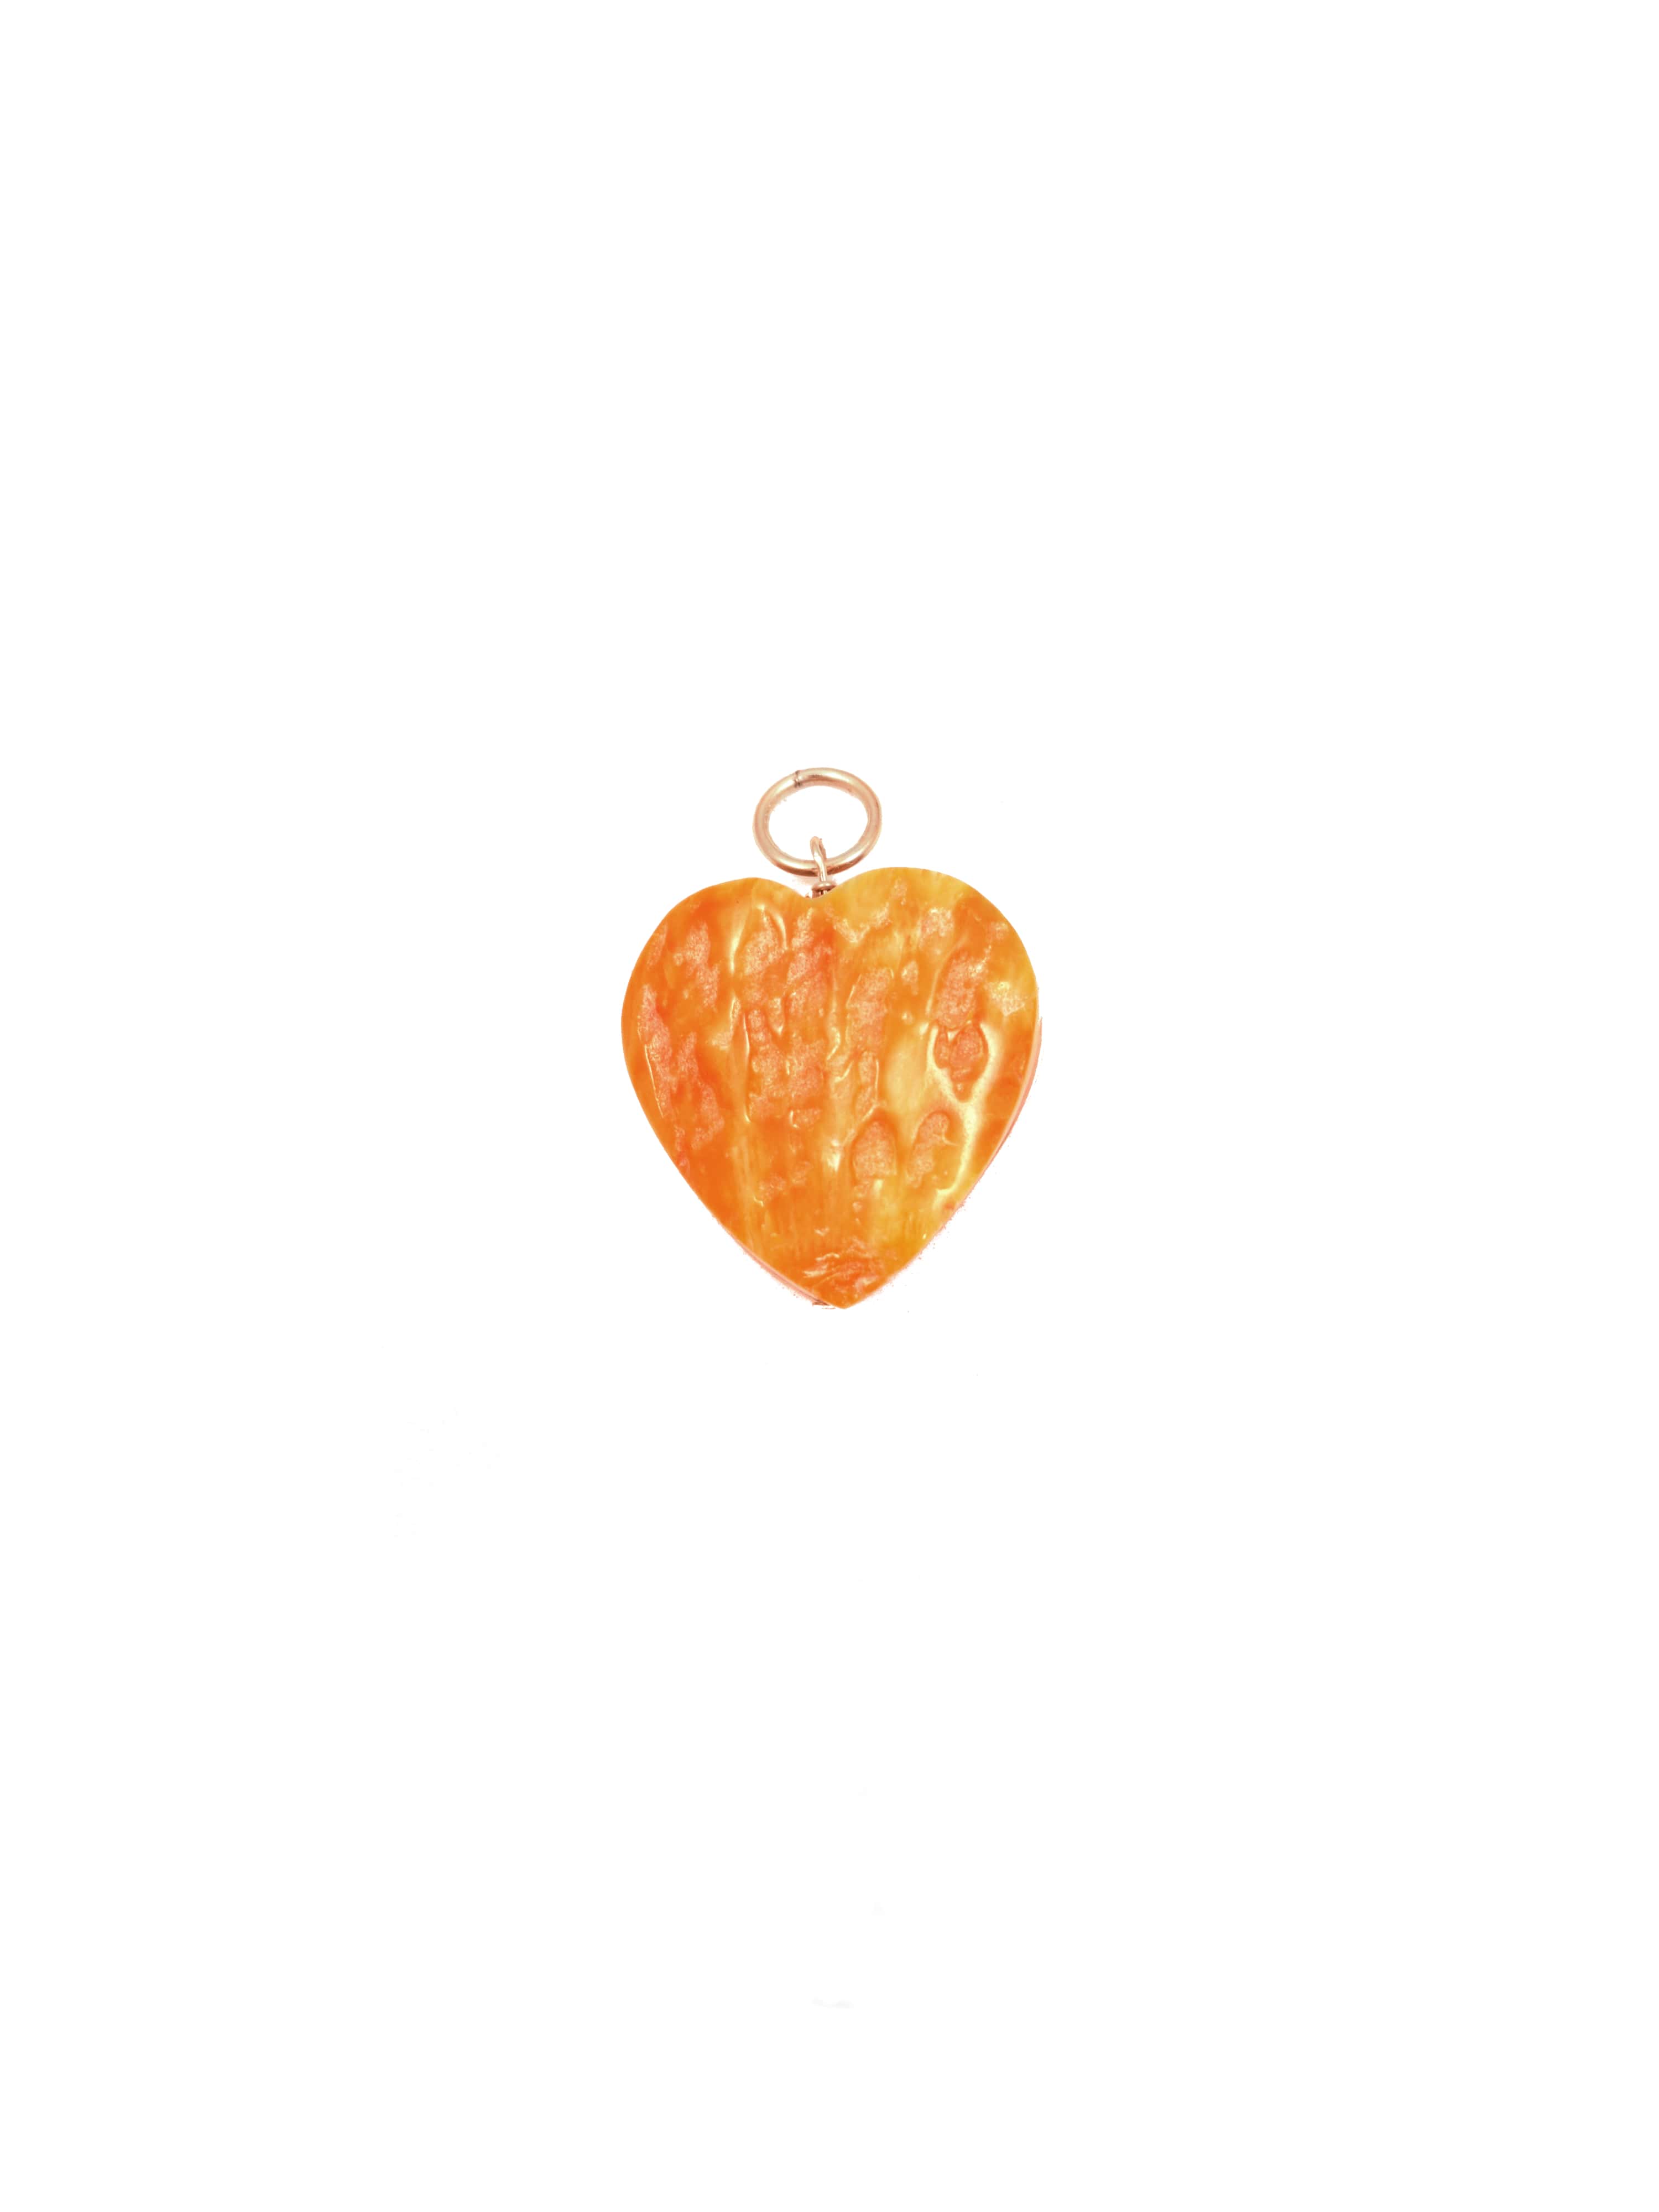 Carved Orange Heart Charm